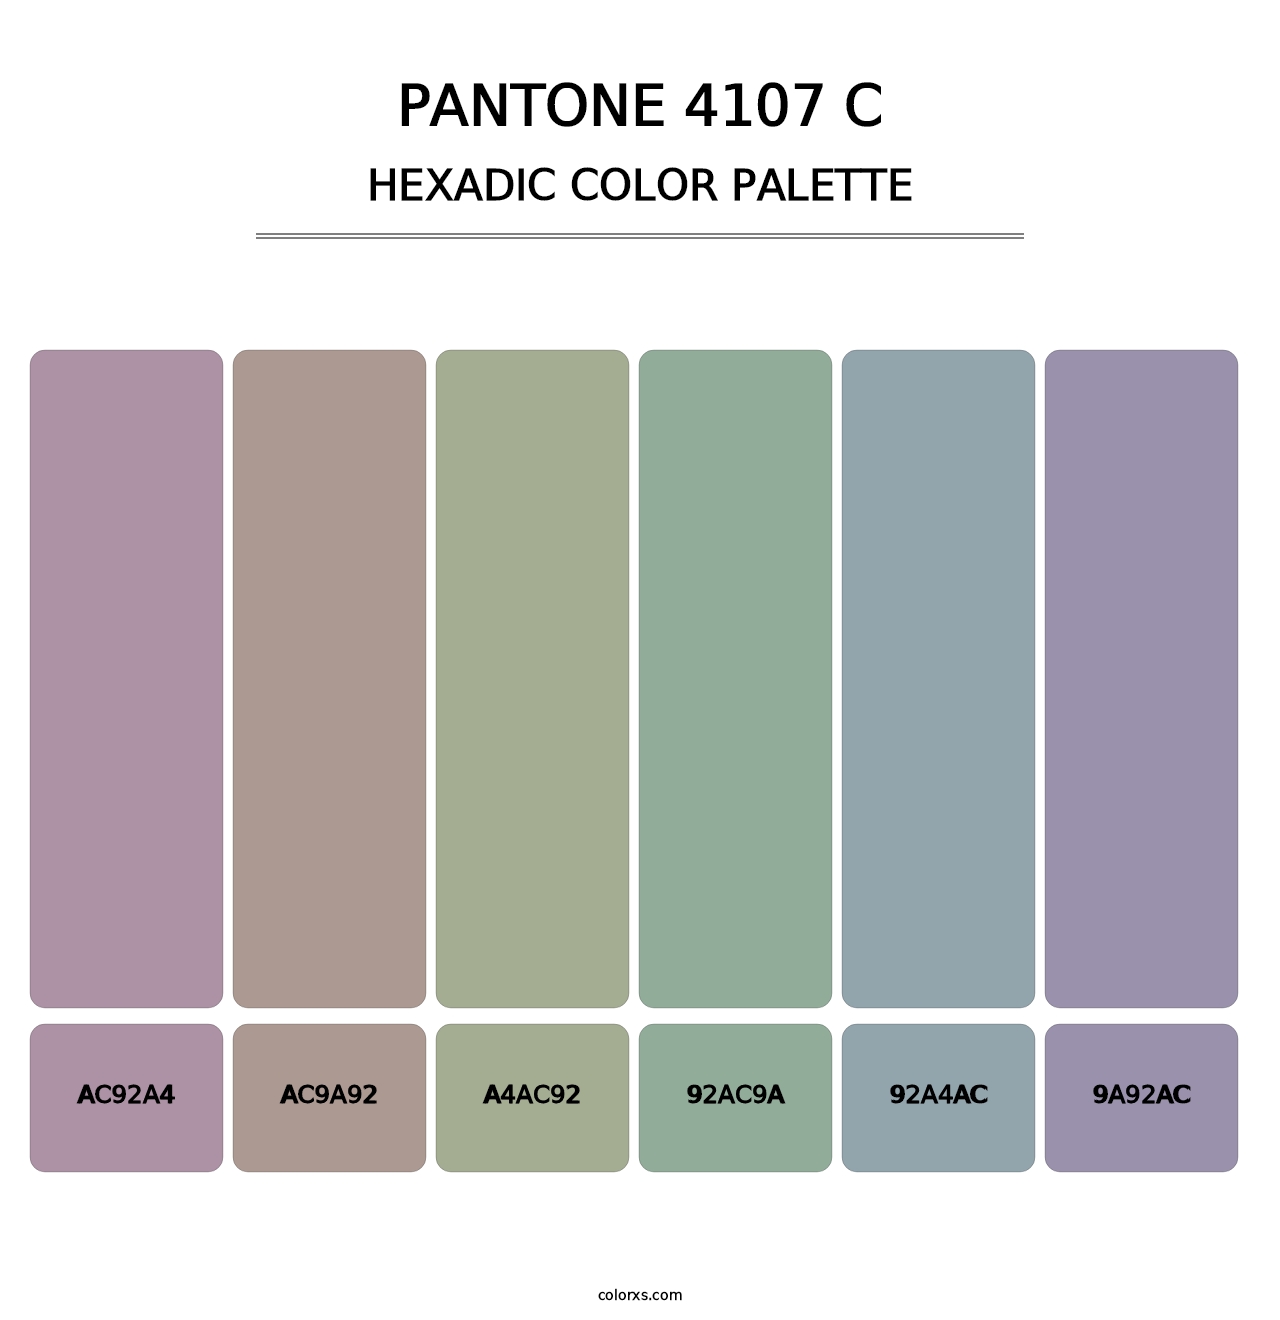 PANTONE 4107 C - Hexadic Color Palette